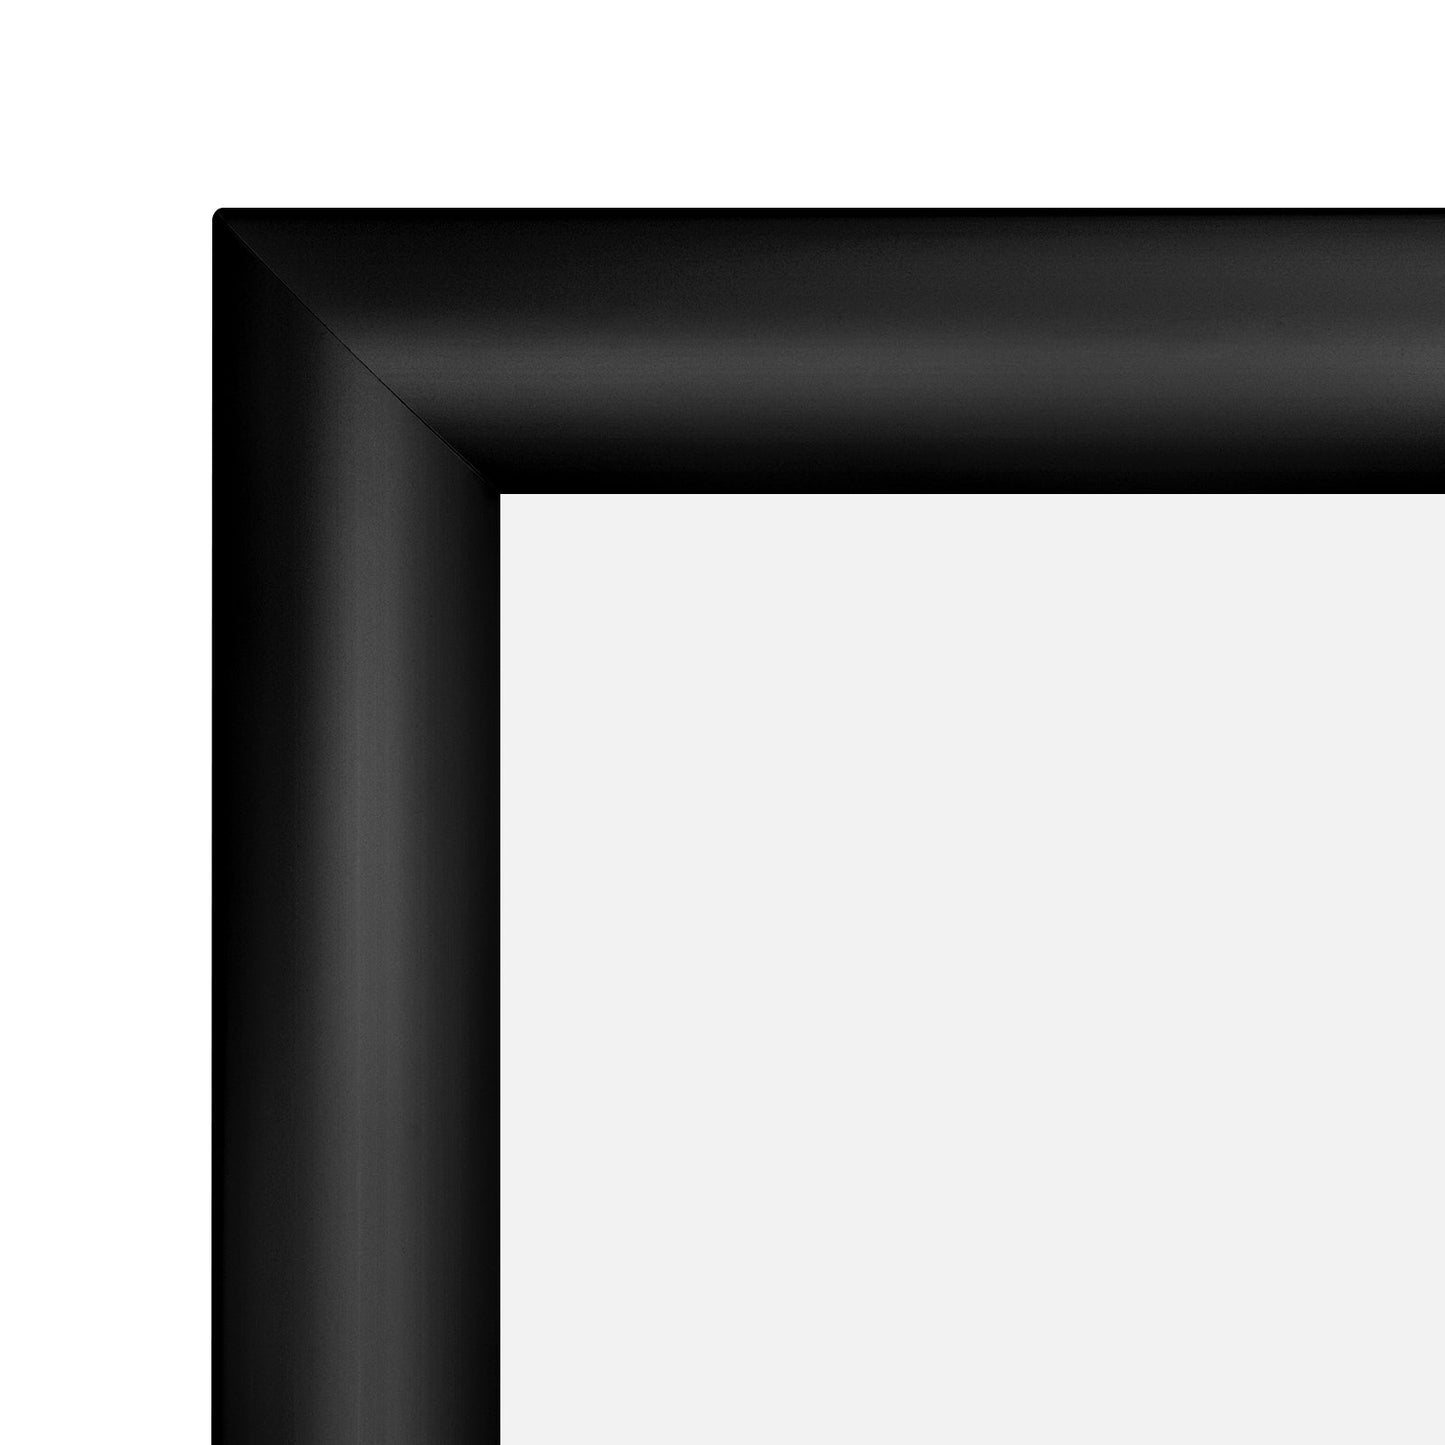 23x23 Black SnapeZo® Snap Frame - 1.2" Profile - Snap Frames Direct